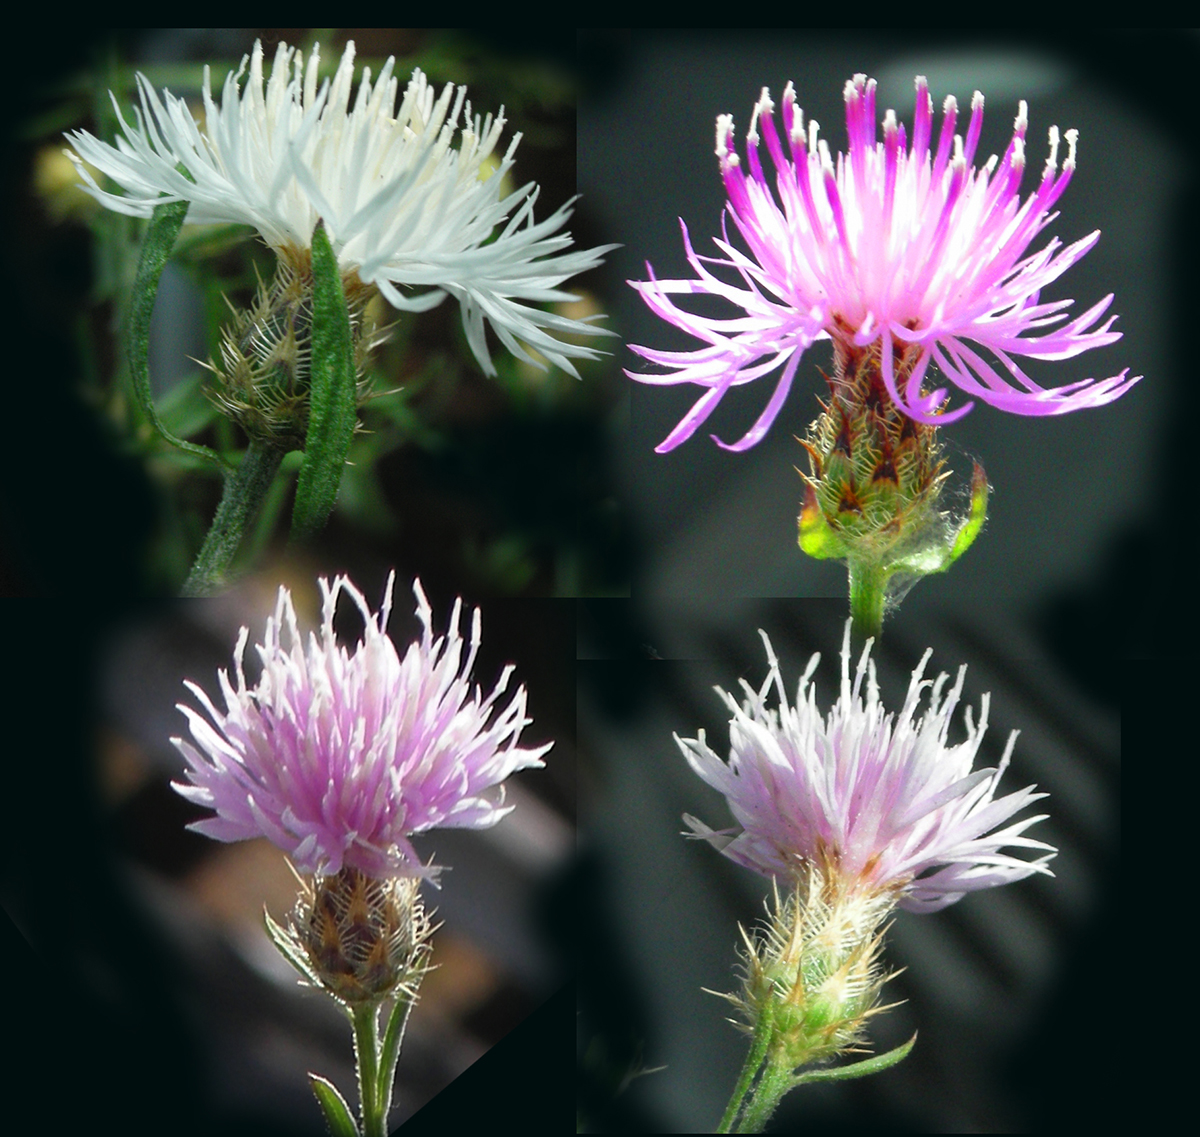 Centaurea-diffusa-diffuse-knapweed-flowers-variations